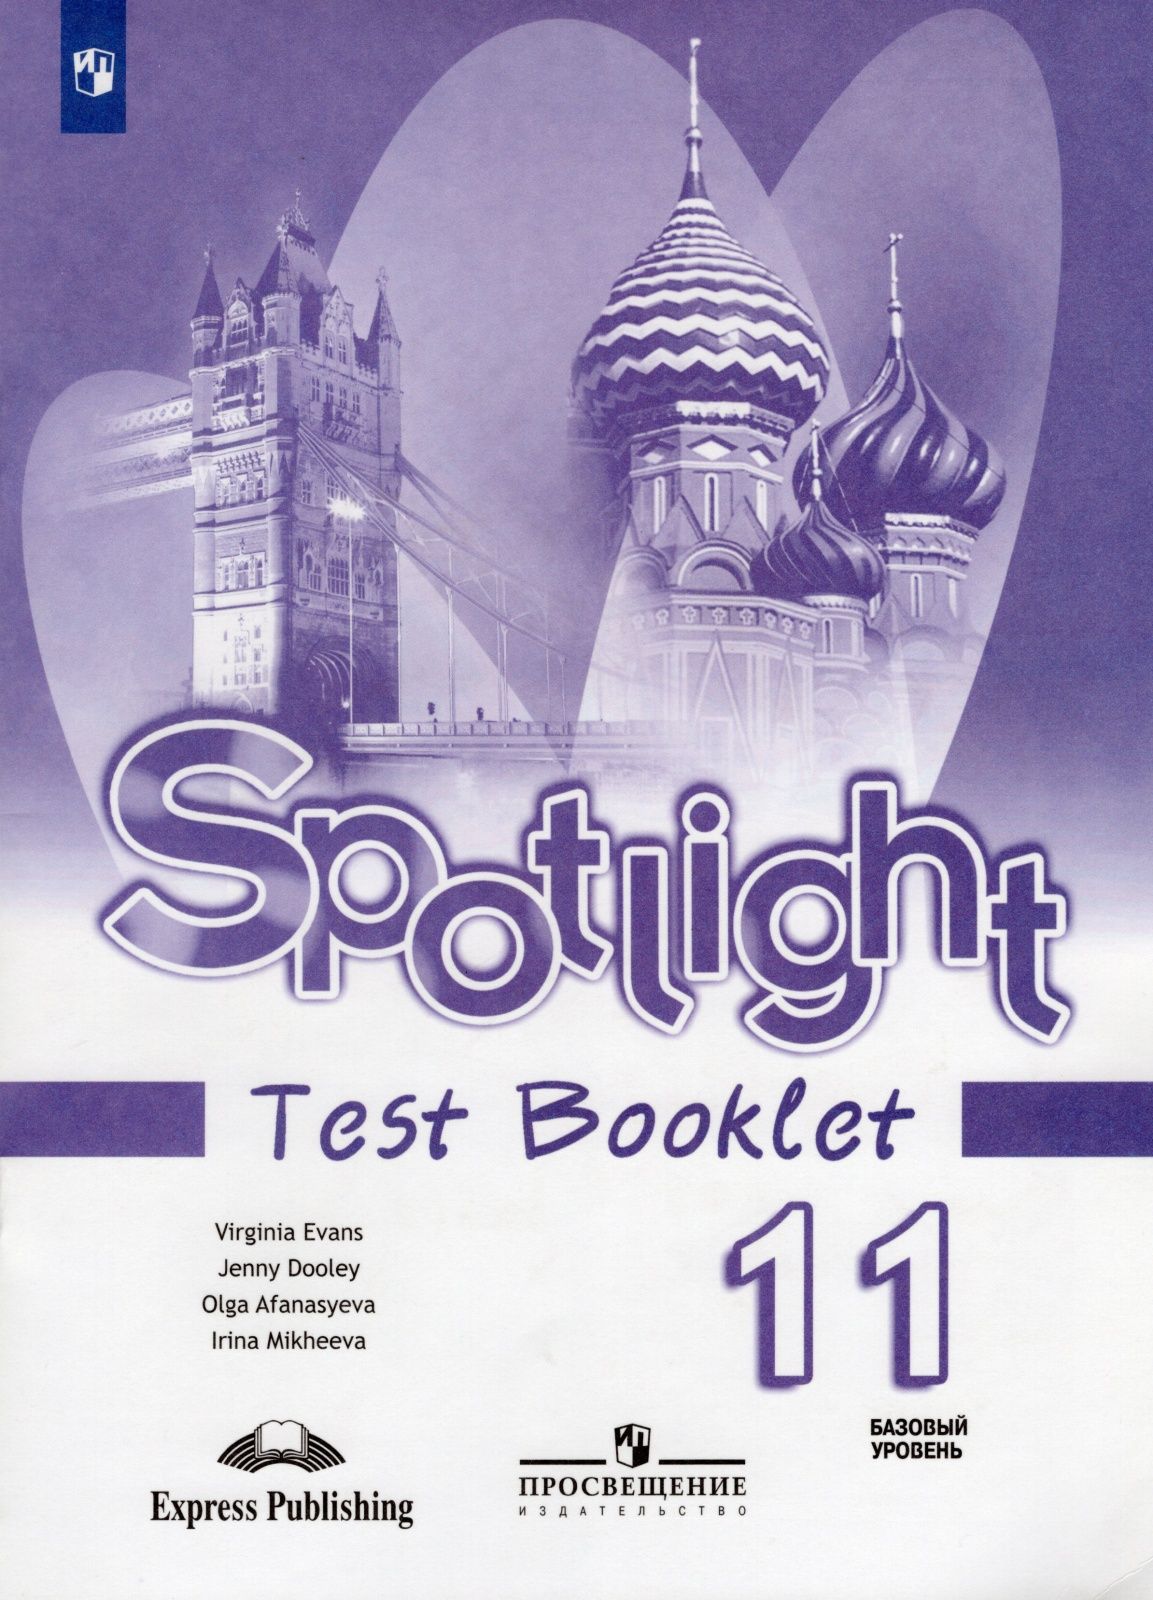 Spotlight 9 2023. Test booklet 9 класс Spotlight ваулина. Английский язык 9 класс ваулина тест буклет. Спотлайт 11 класс тест буклет. Спотлайт 9 класс тест буклет.